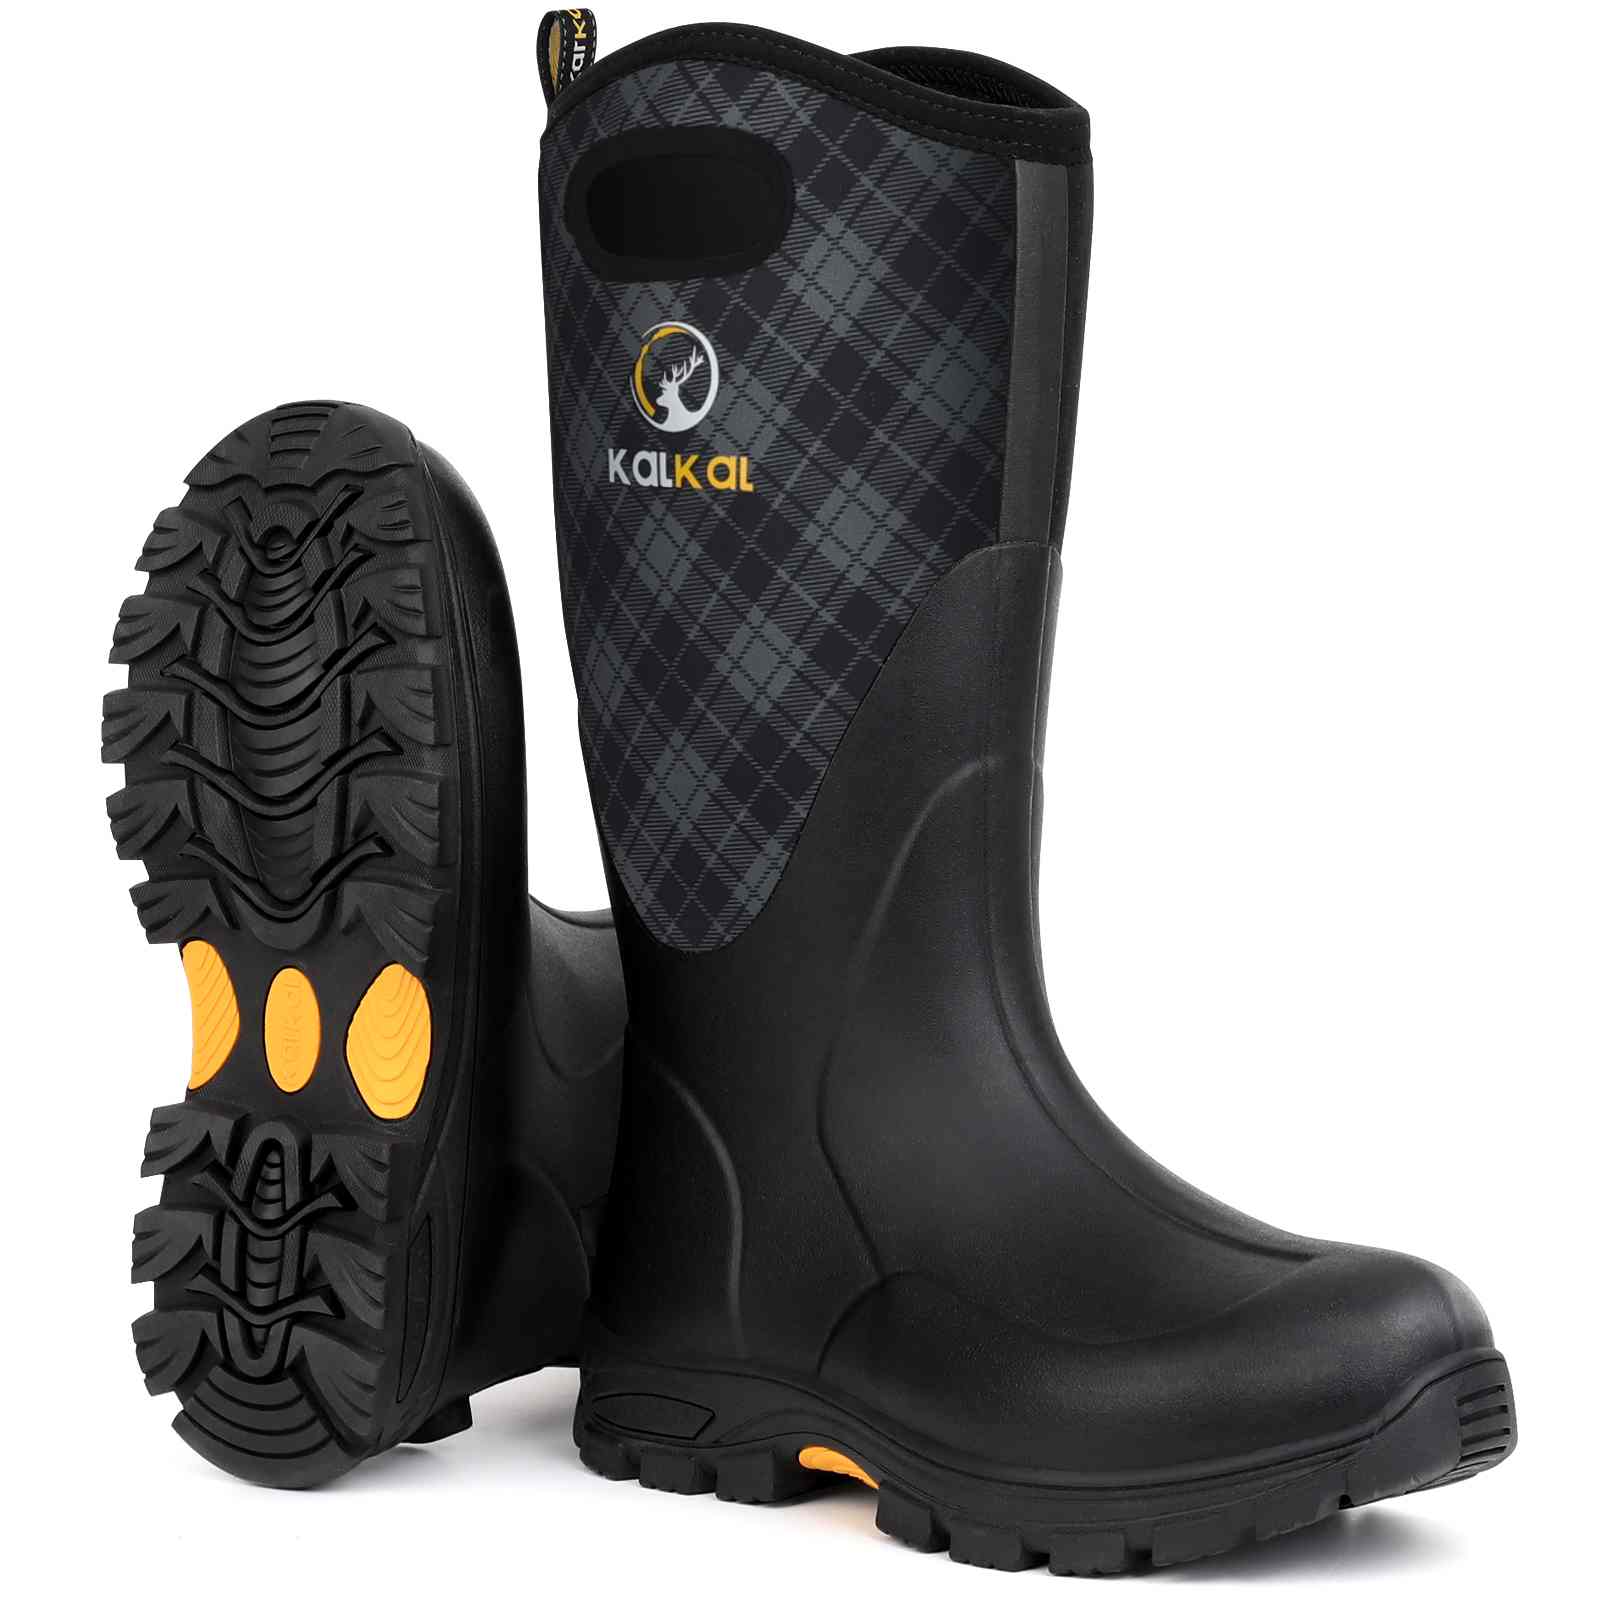 rain work boots for farming